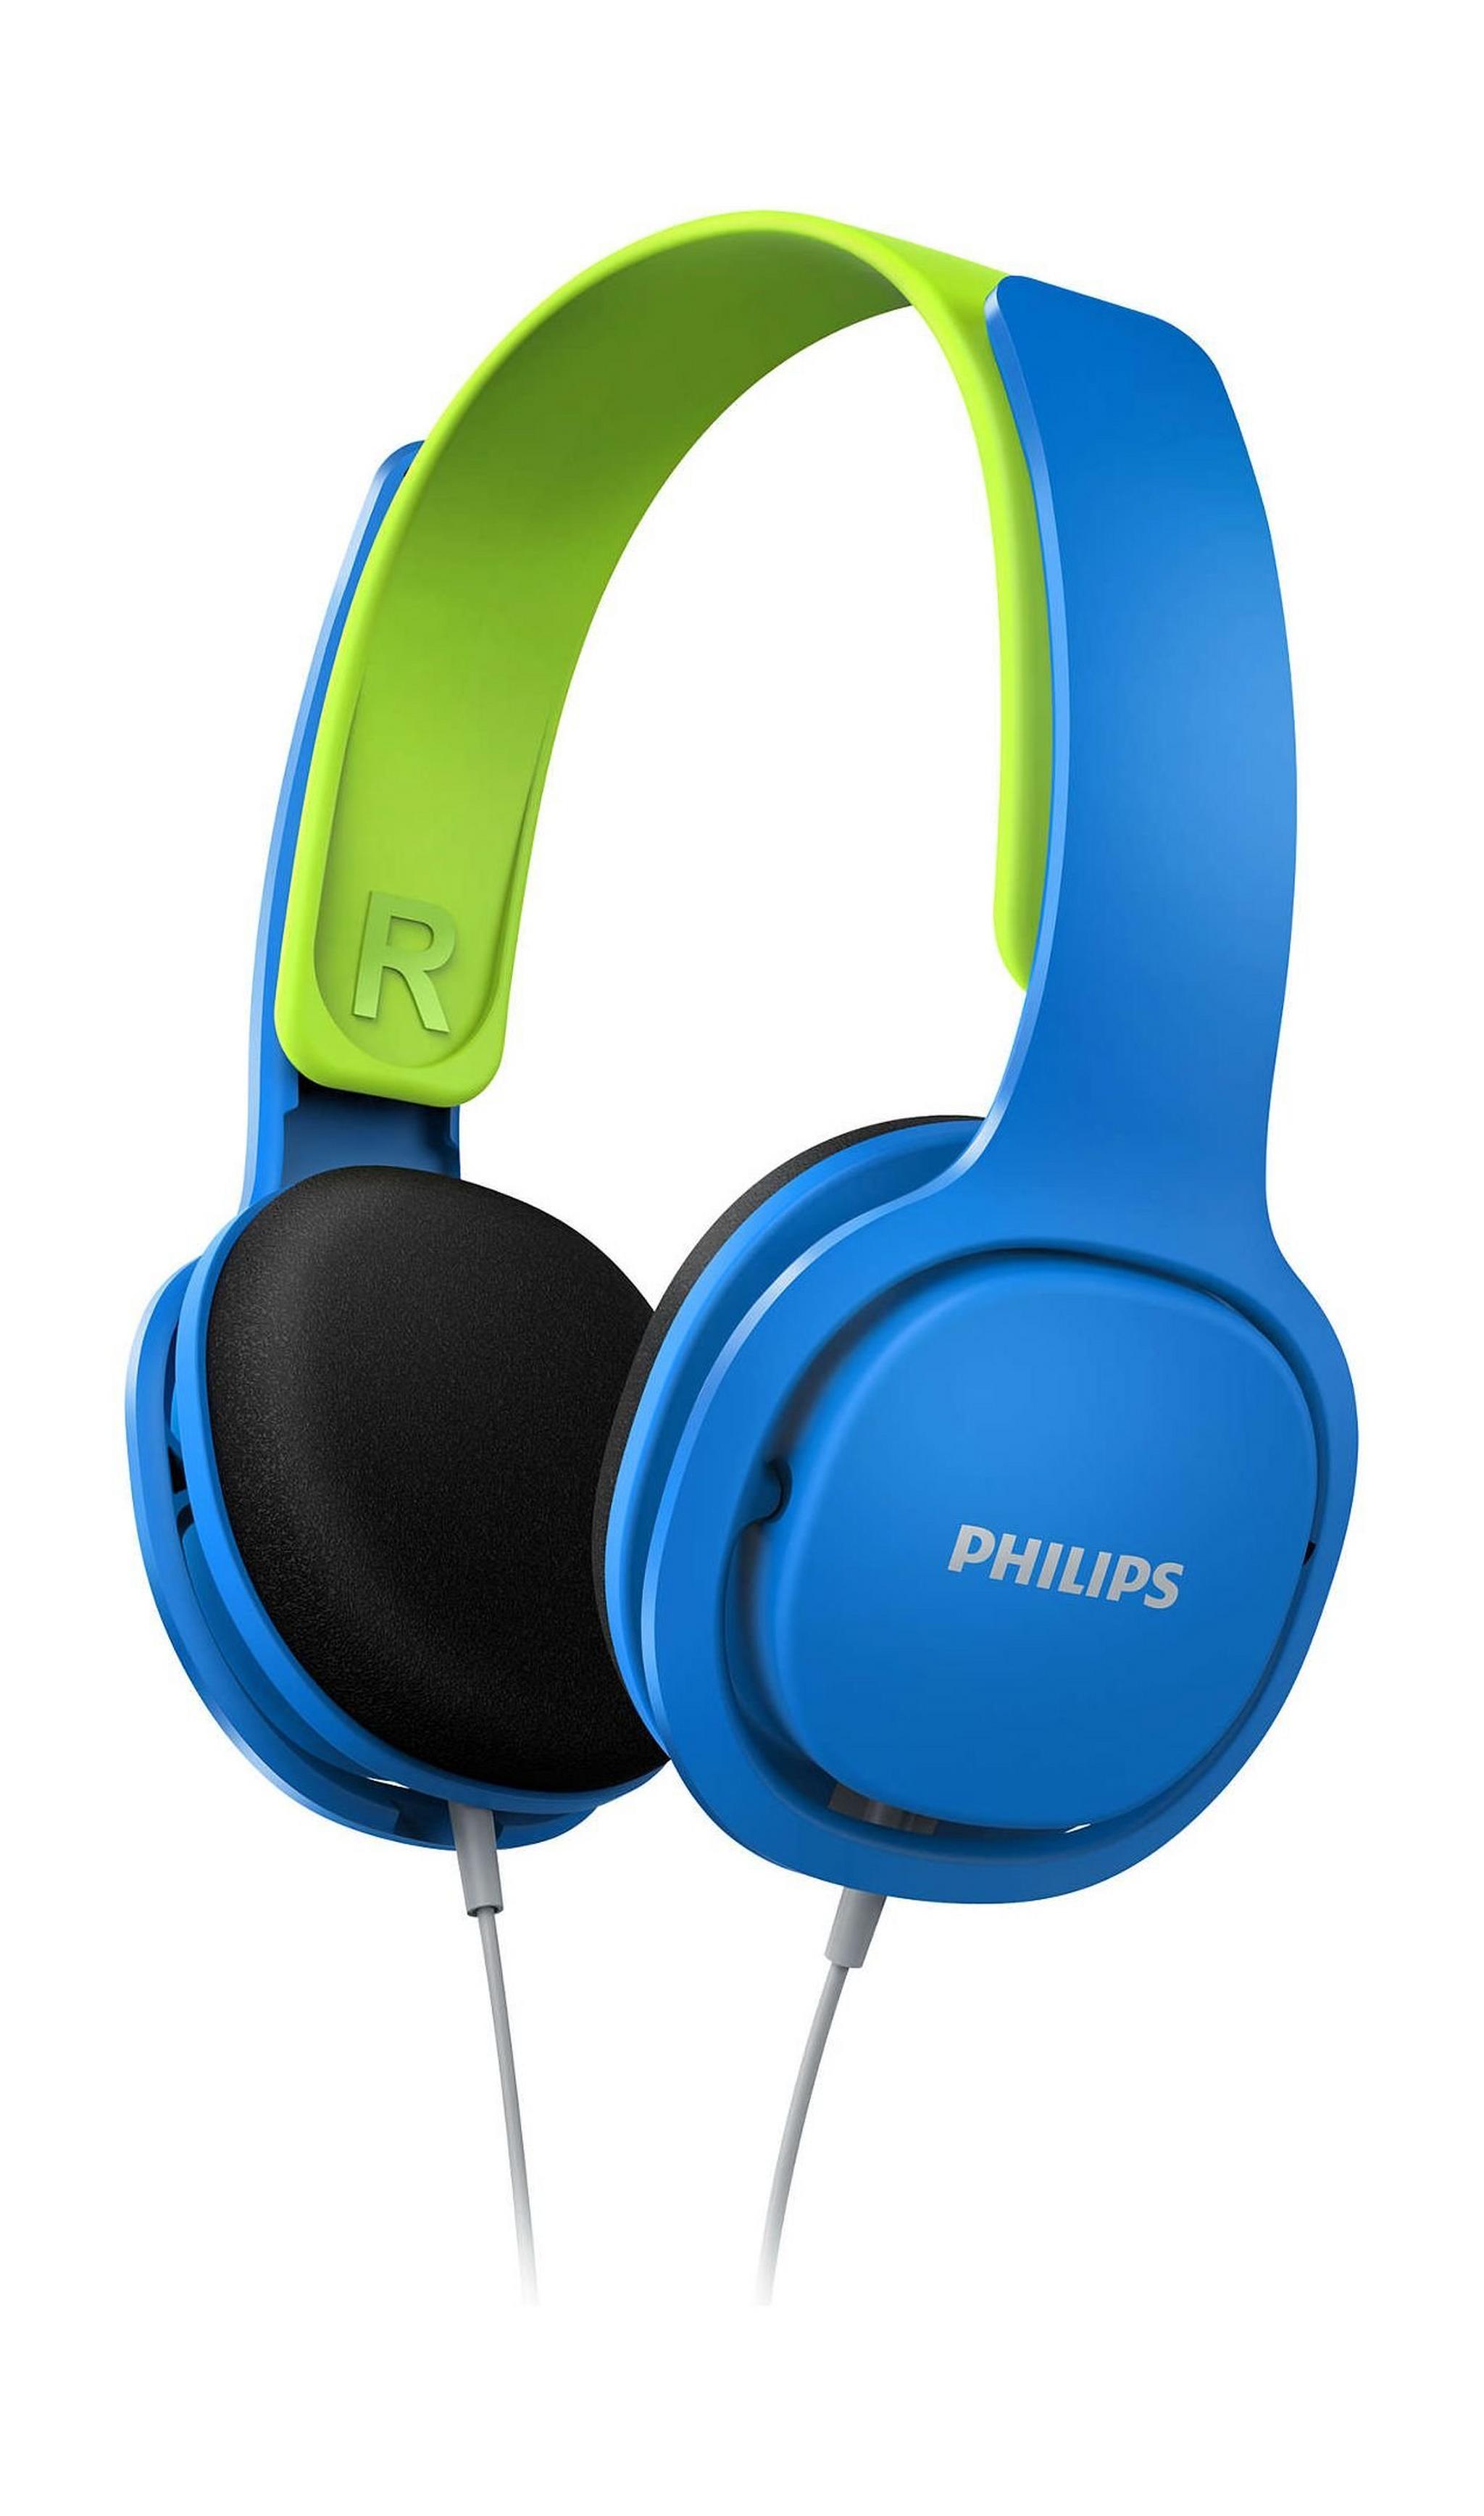 Philips Lightweight Kids Headphones With Volume Control - Blue/Green (SHK2000BL)